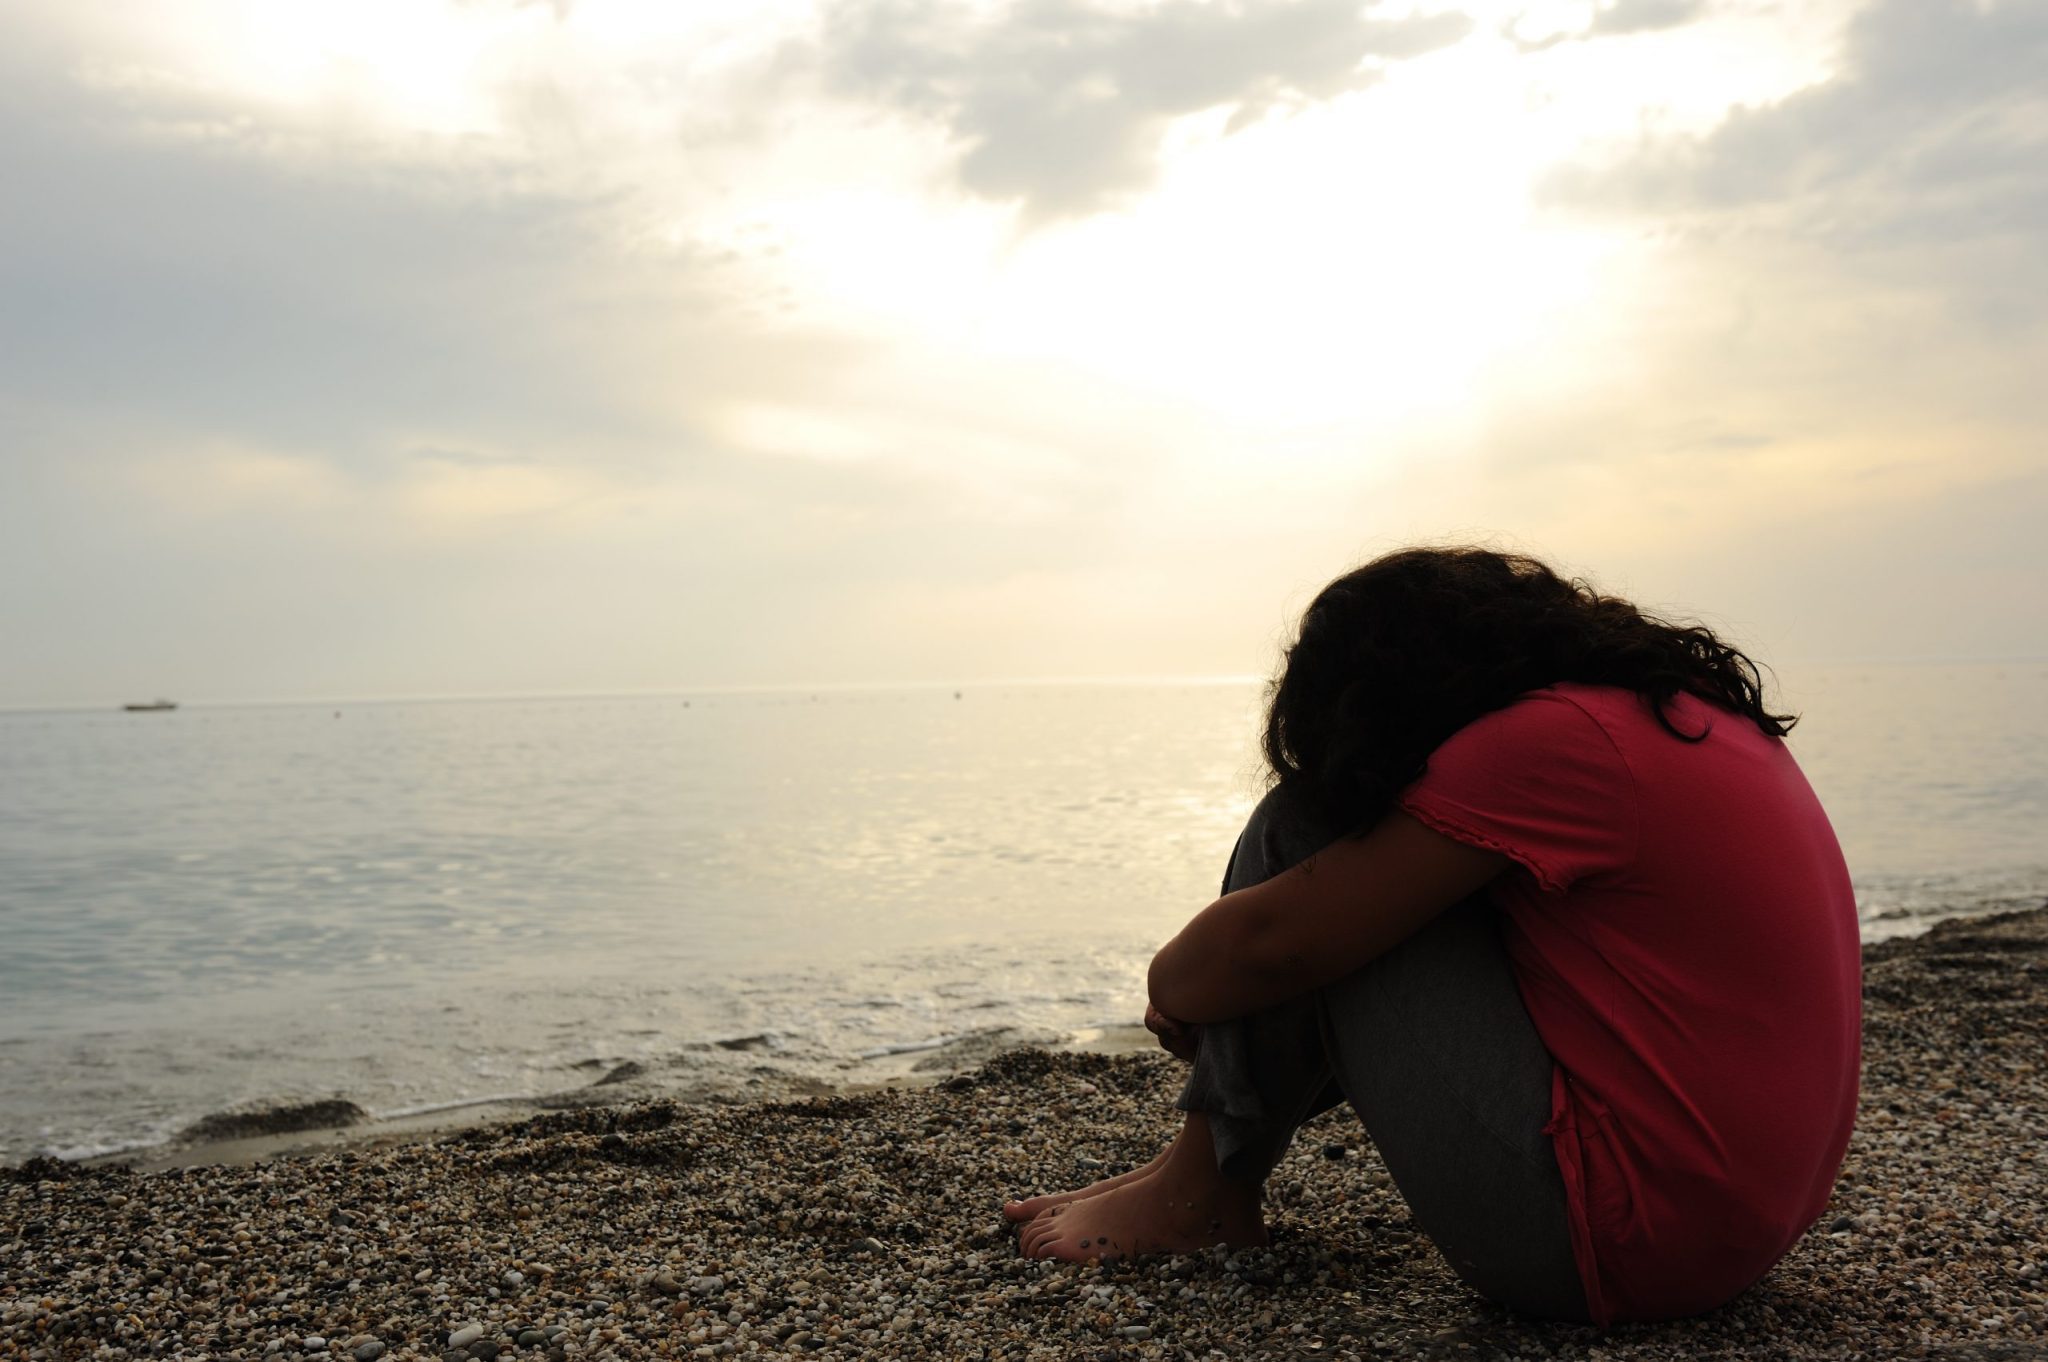 Juvenile Depression – An Alterative Approach